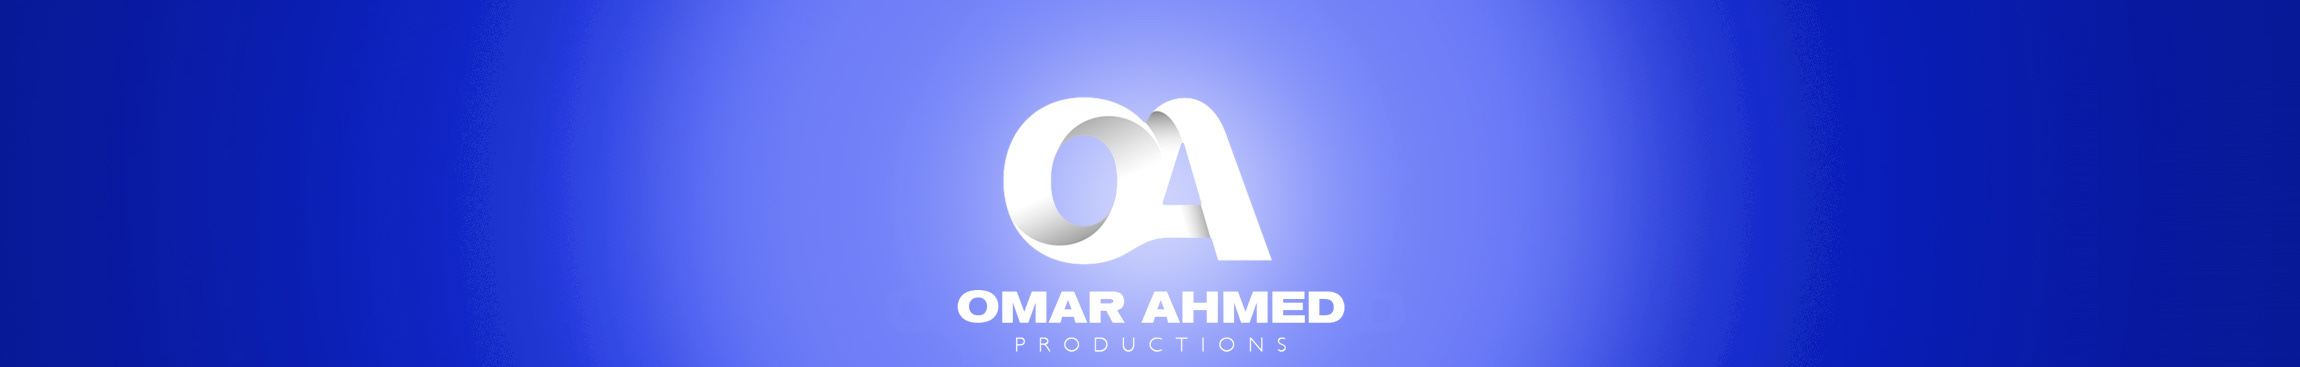 OMAR AHMED's profile banner